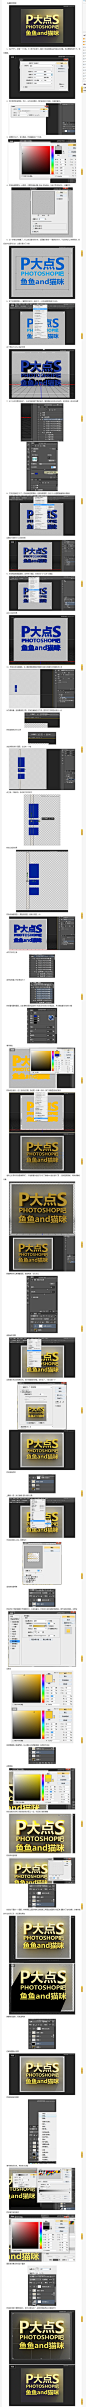 Photoshop使用3D功能制作震撼的立体字

http://www.3lian.com/edu/2014/08-28/163049.html